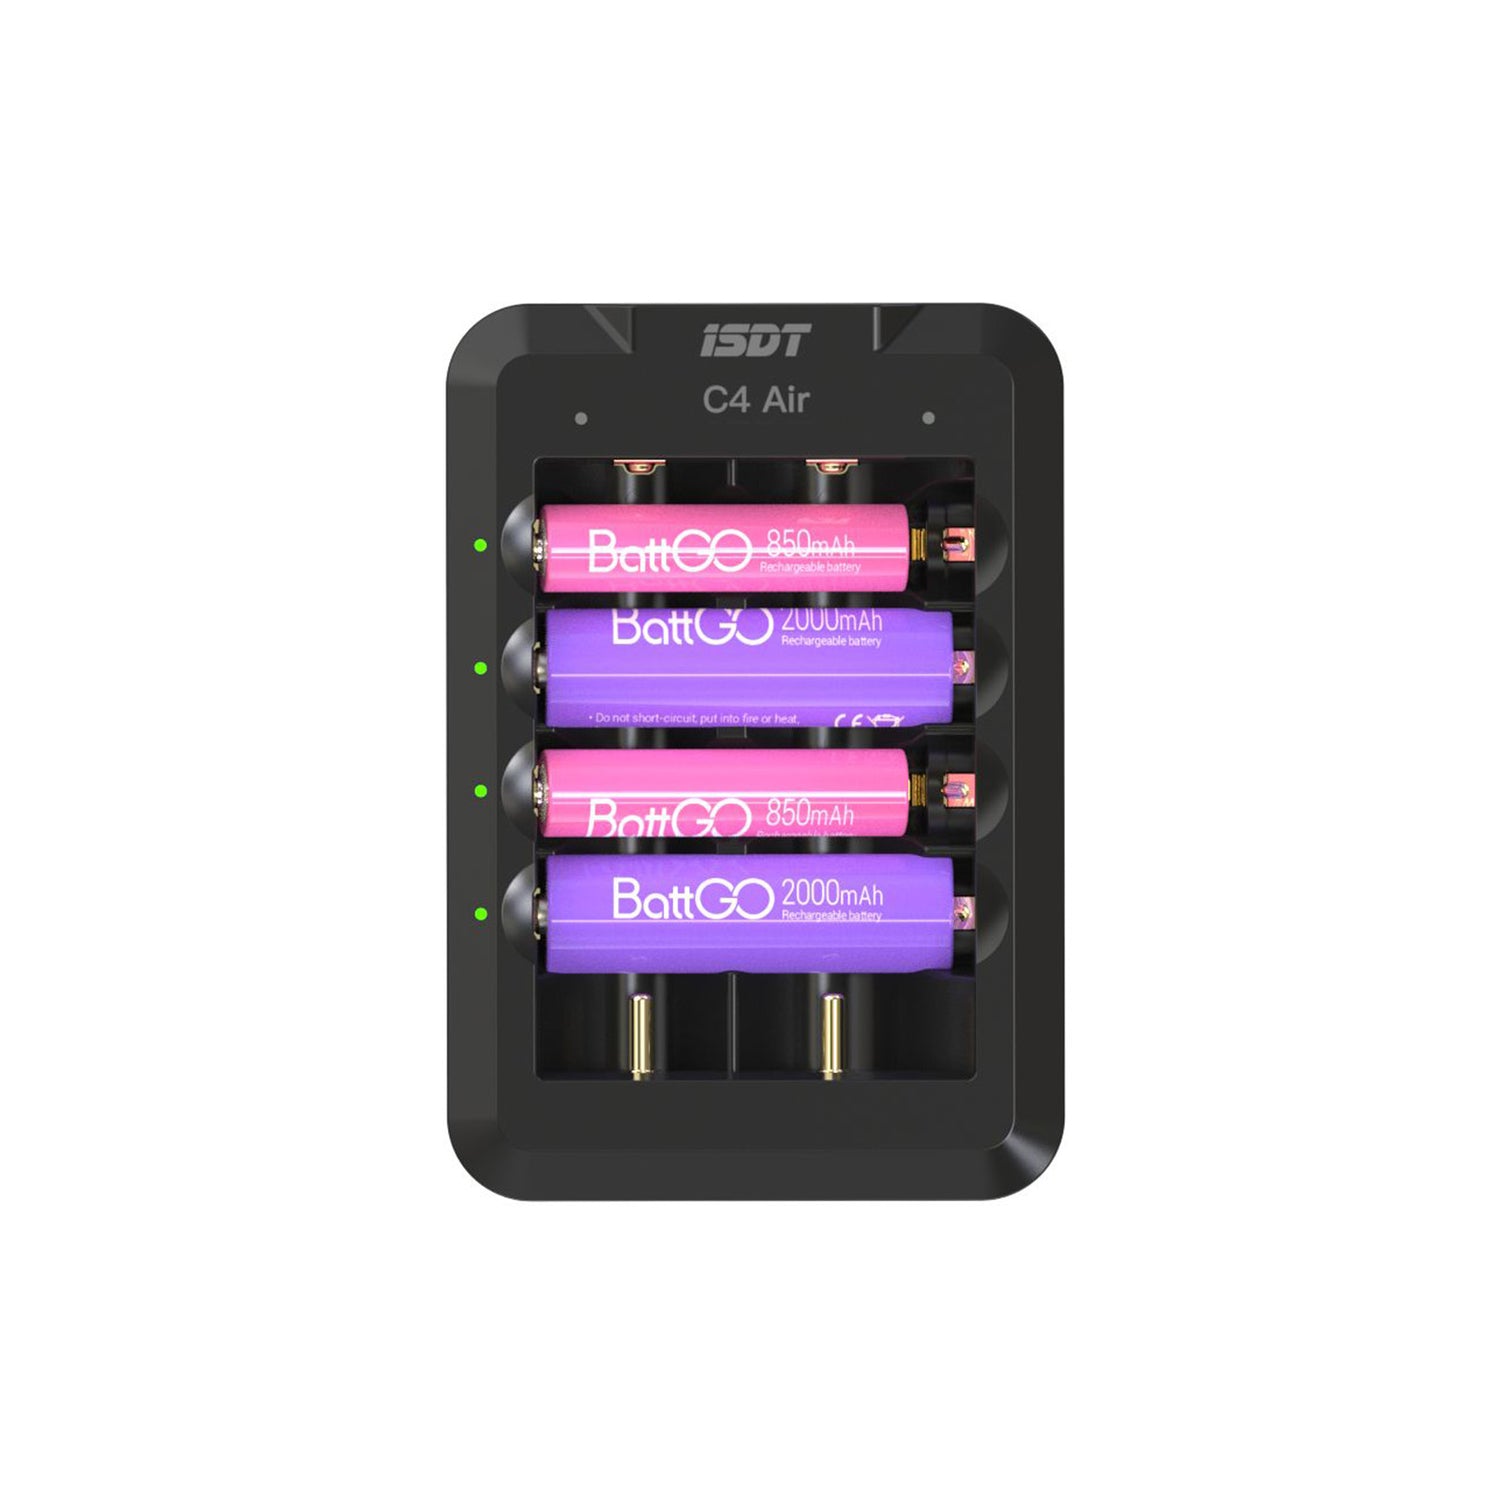 C4 Air Quick -Batterie -Ladegerät, 6 Slots USB C Haushaltsbattereladegerät mit Bluetooth -App -Verbindungsfunktion